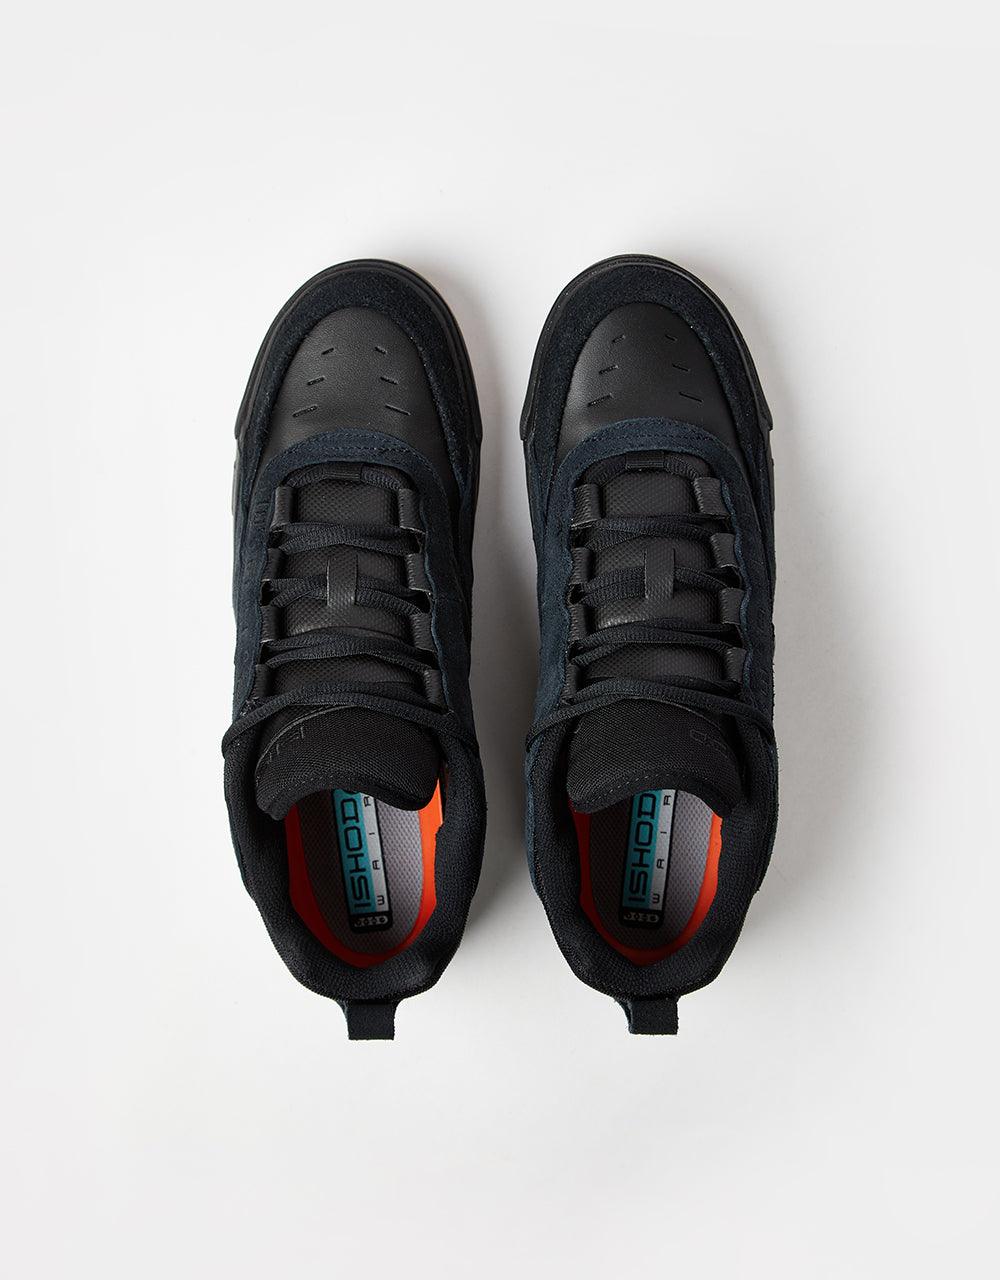 Nike SB Air Max Ishod Skate Shoes - Black/Black-Anthracite-Black-Gum Lt Brown-Univ Blue